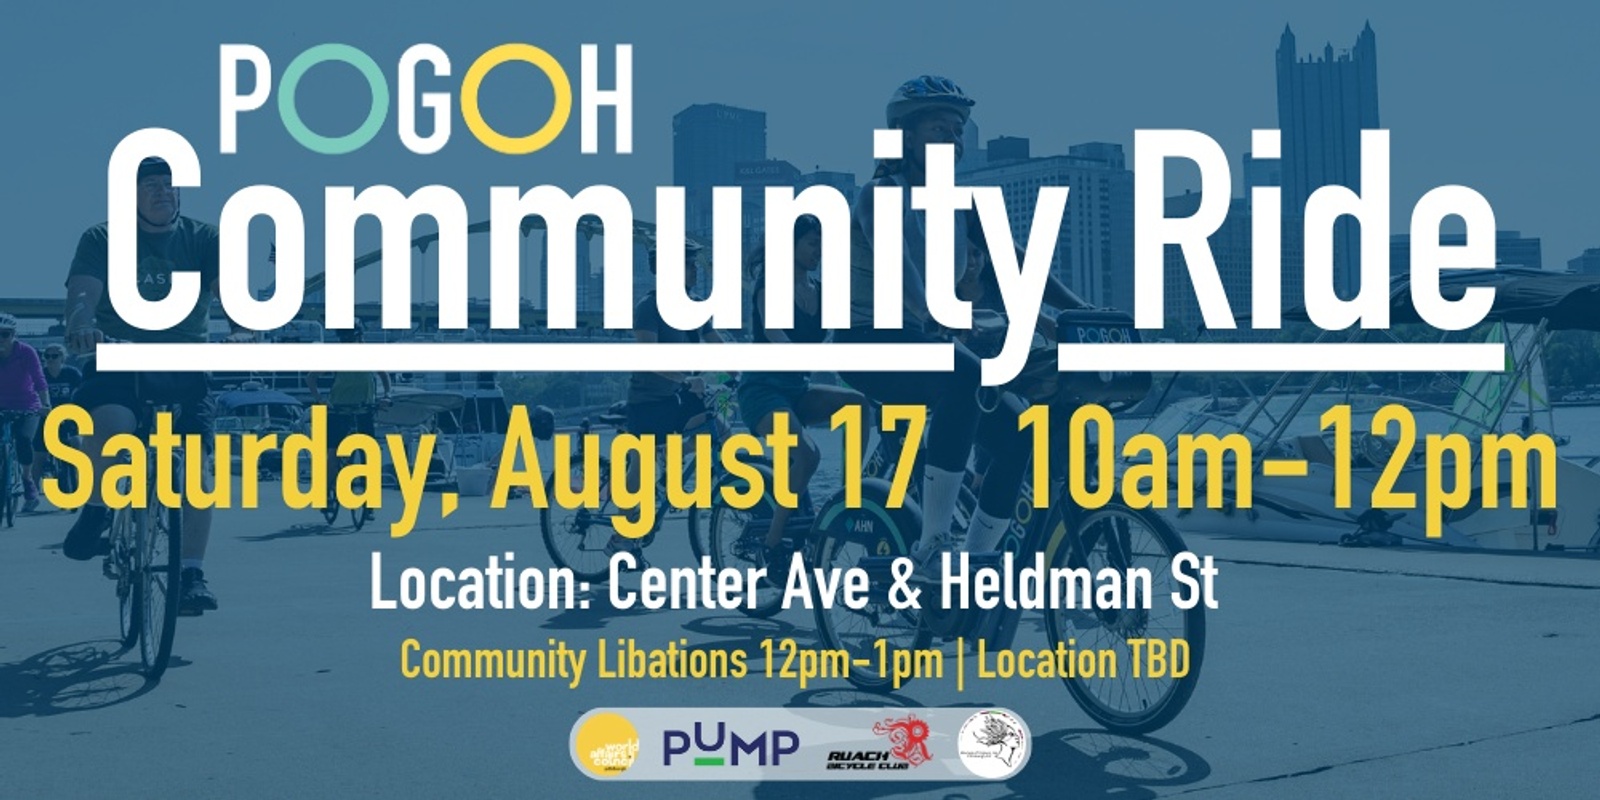 Banner image for August 17th - POGOH Community Ambassador Ride